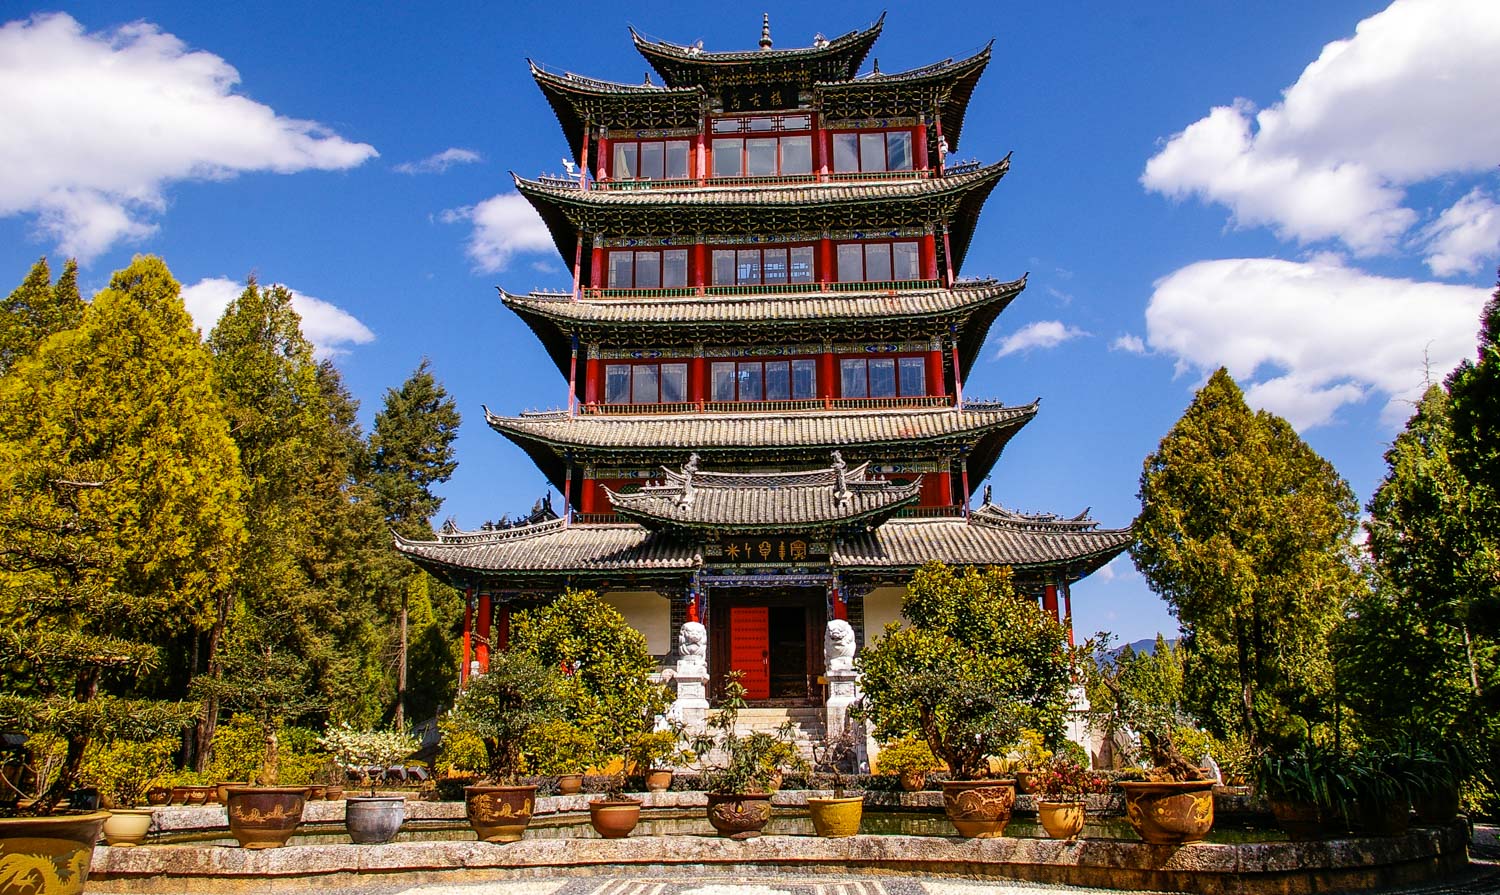 The Wangu Temple that over looks Lijiang